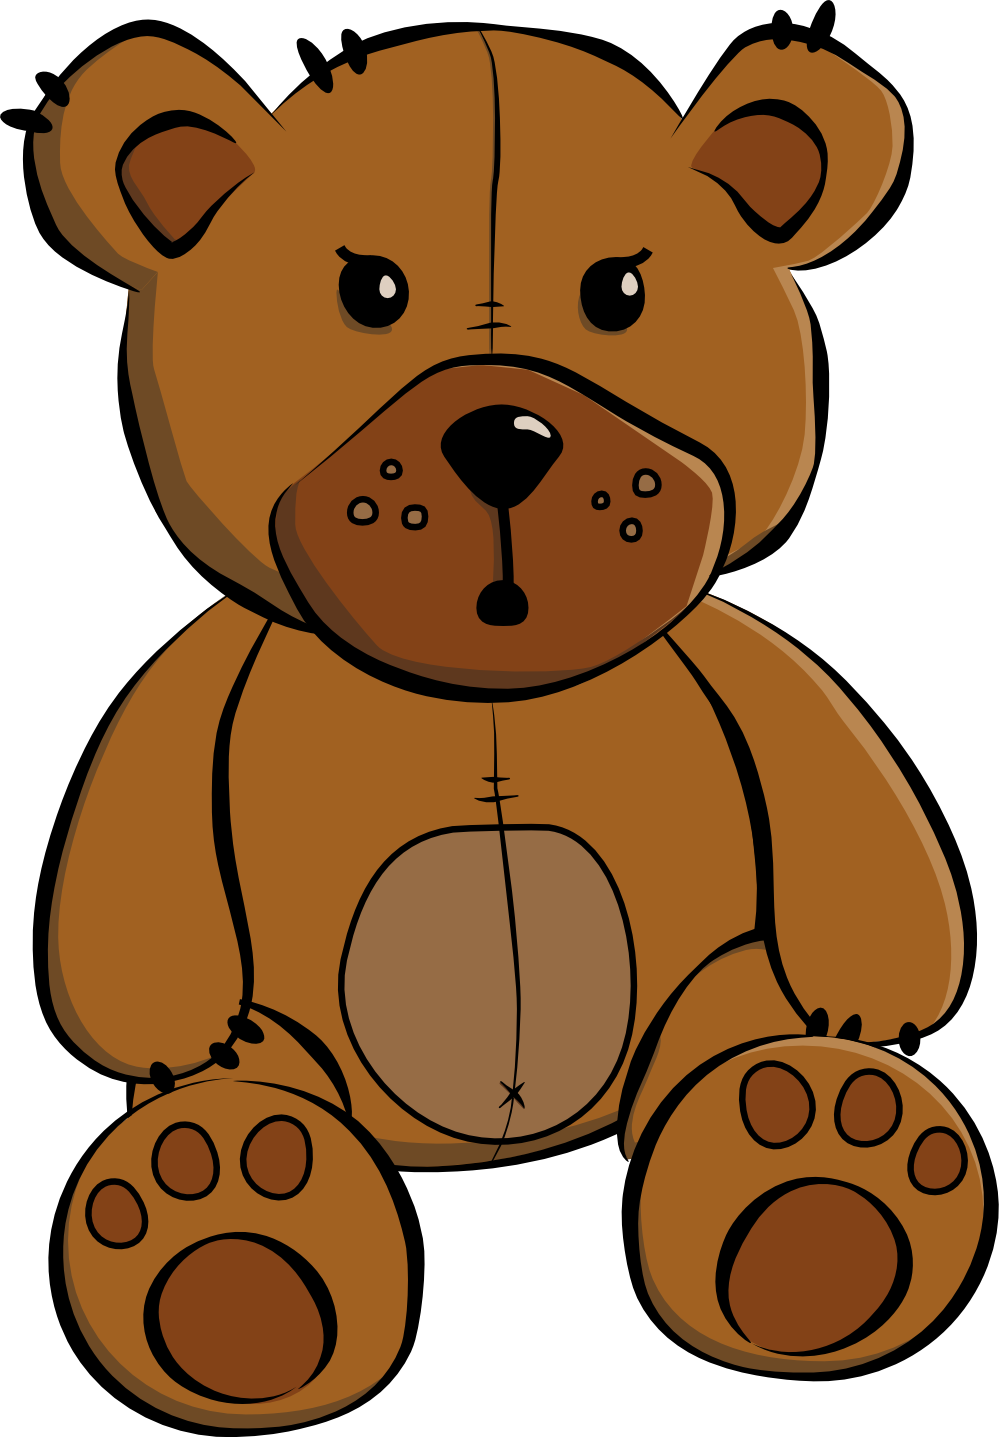 Images For > Teddy Bear Clip Art Outline